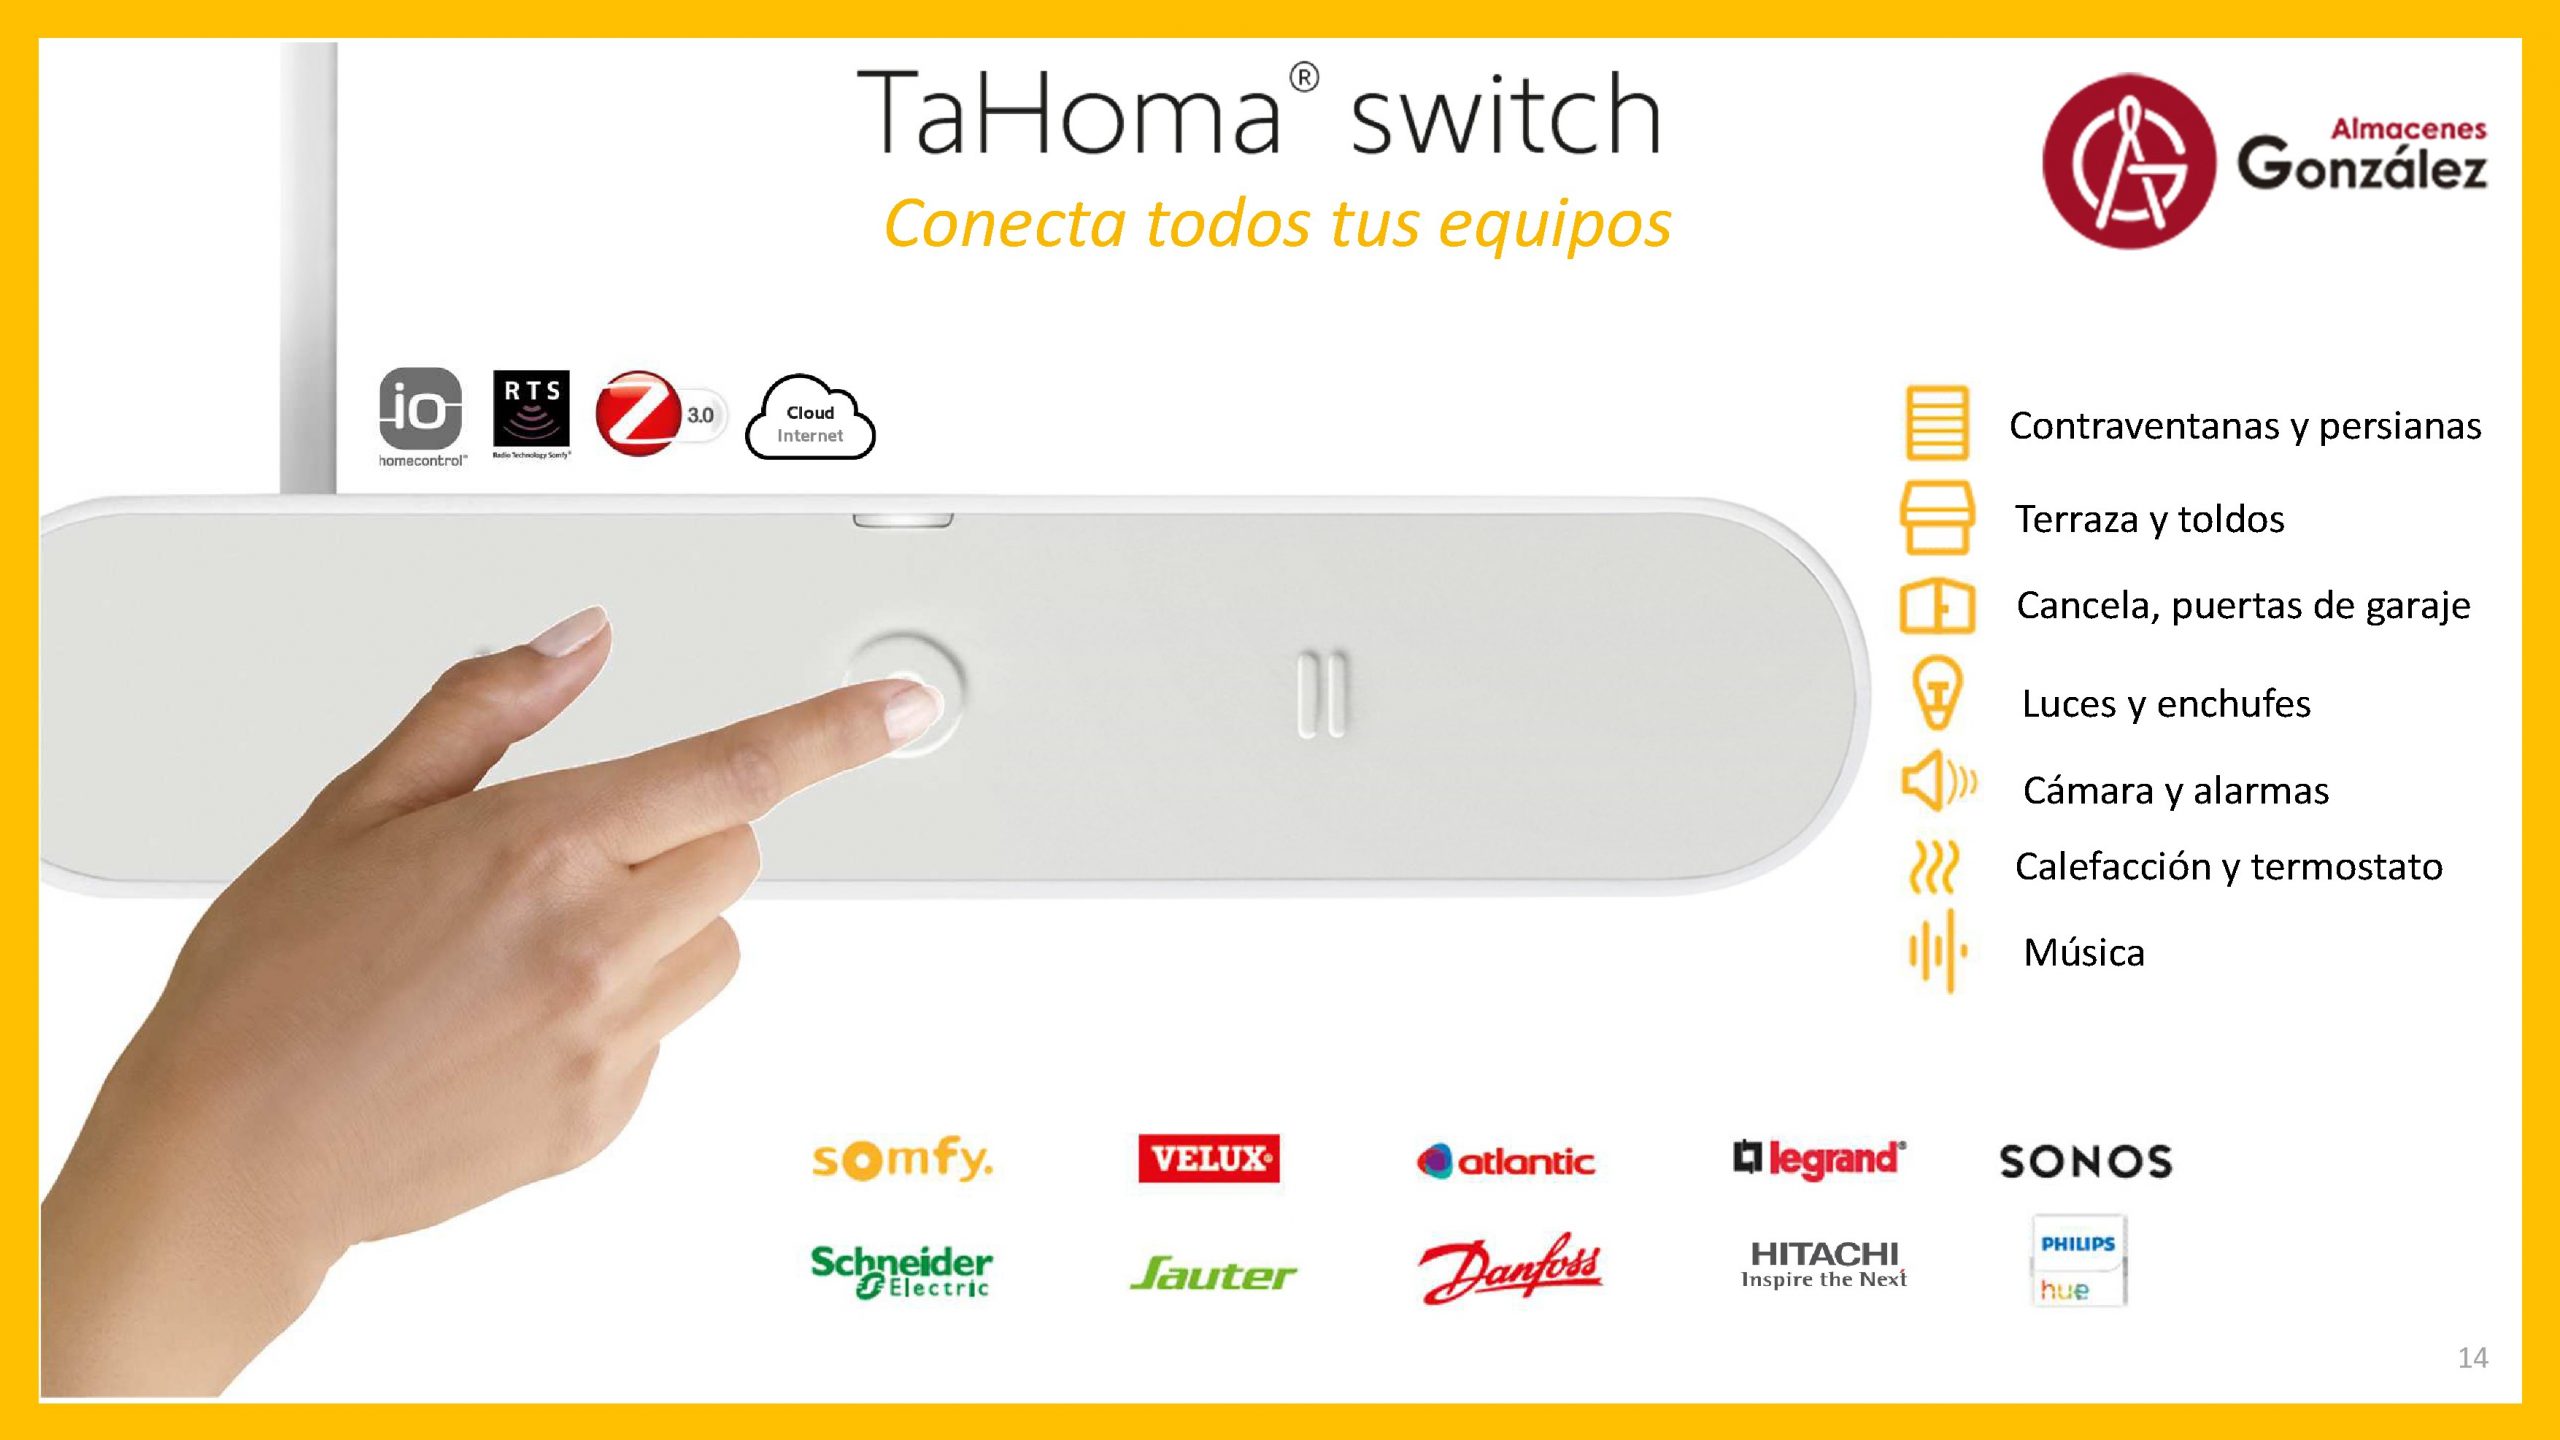 Tahoma Switch